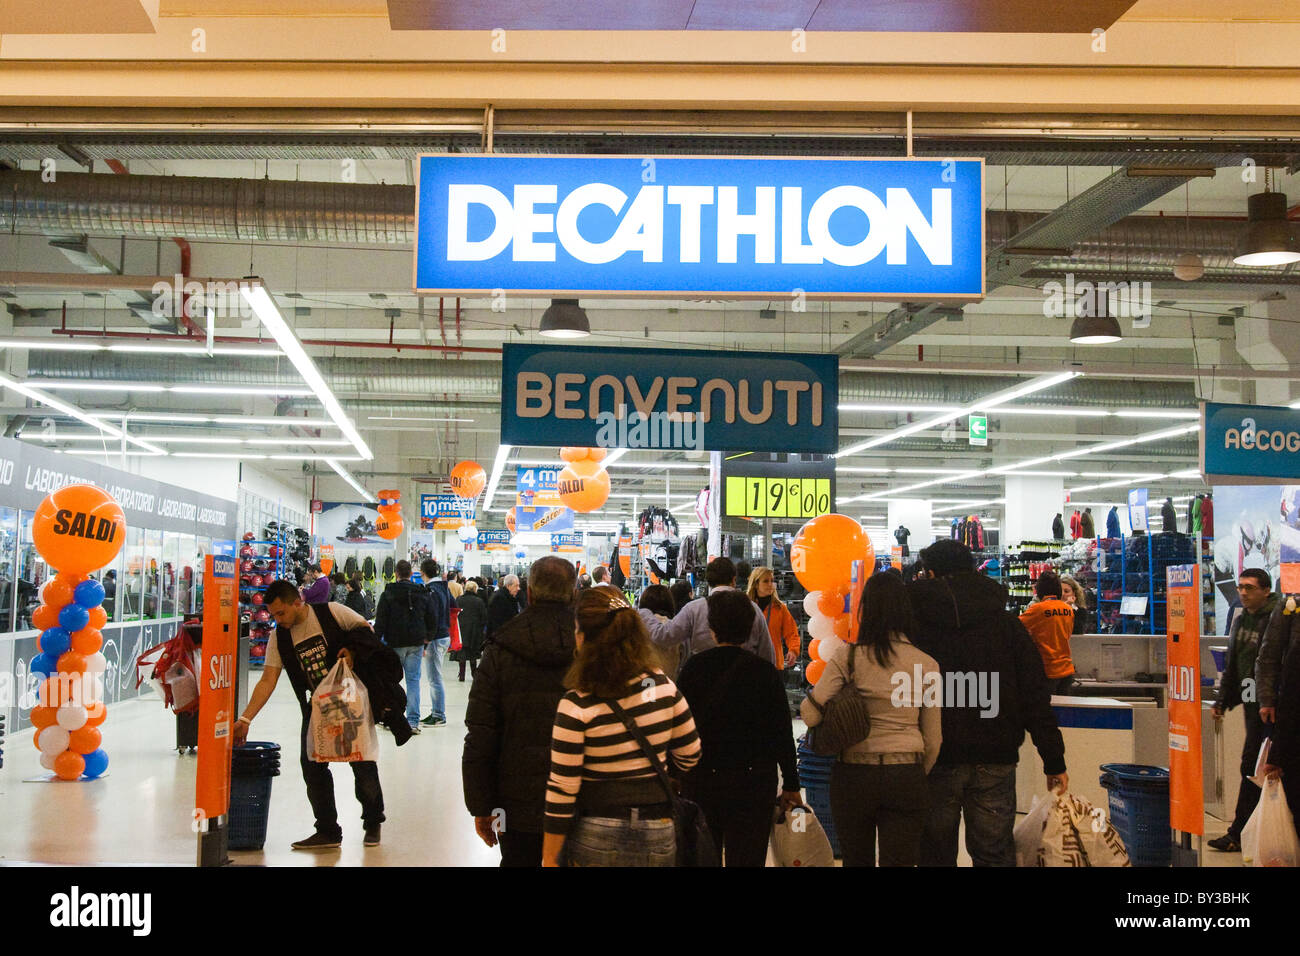 Decathlon Above Entrance Retail Store Decathlon Stock Photo 1455606452